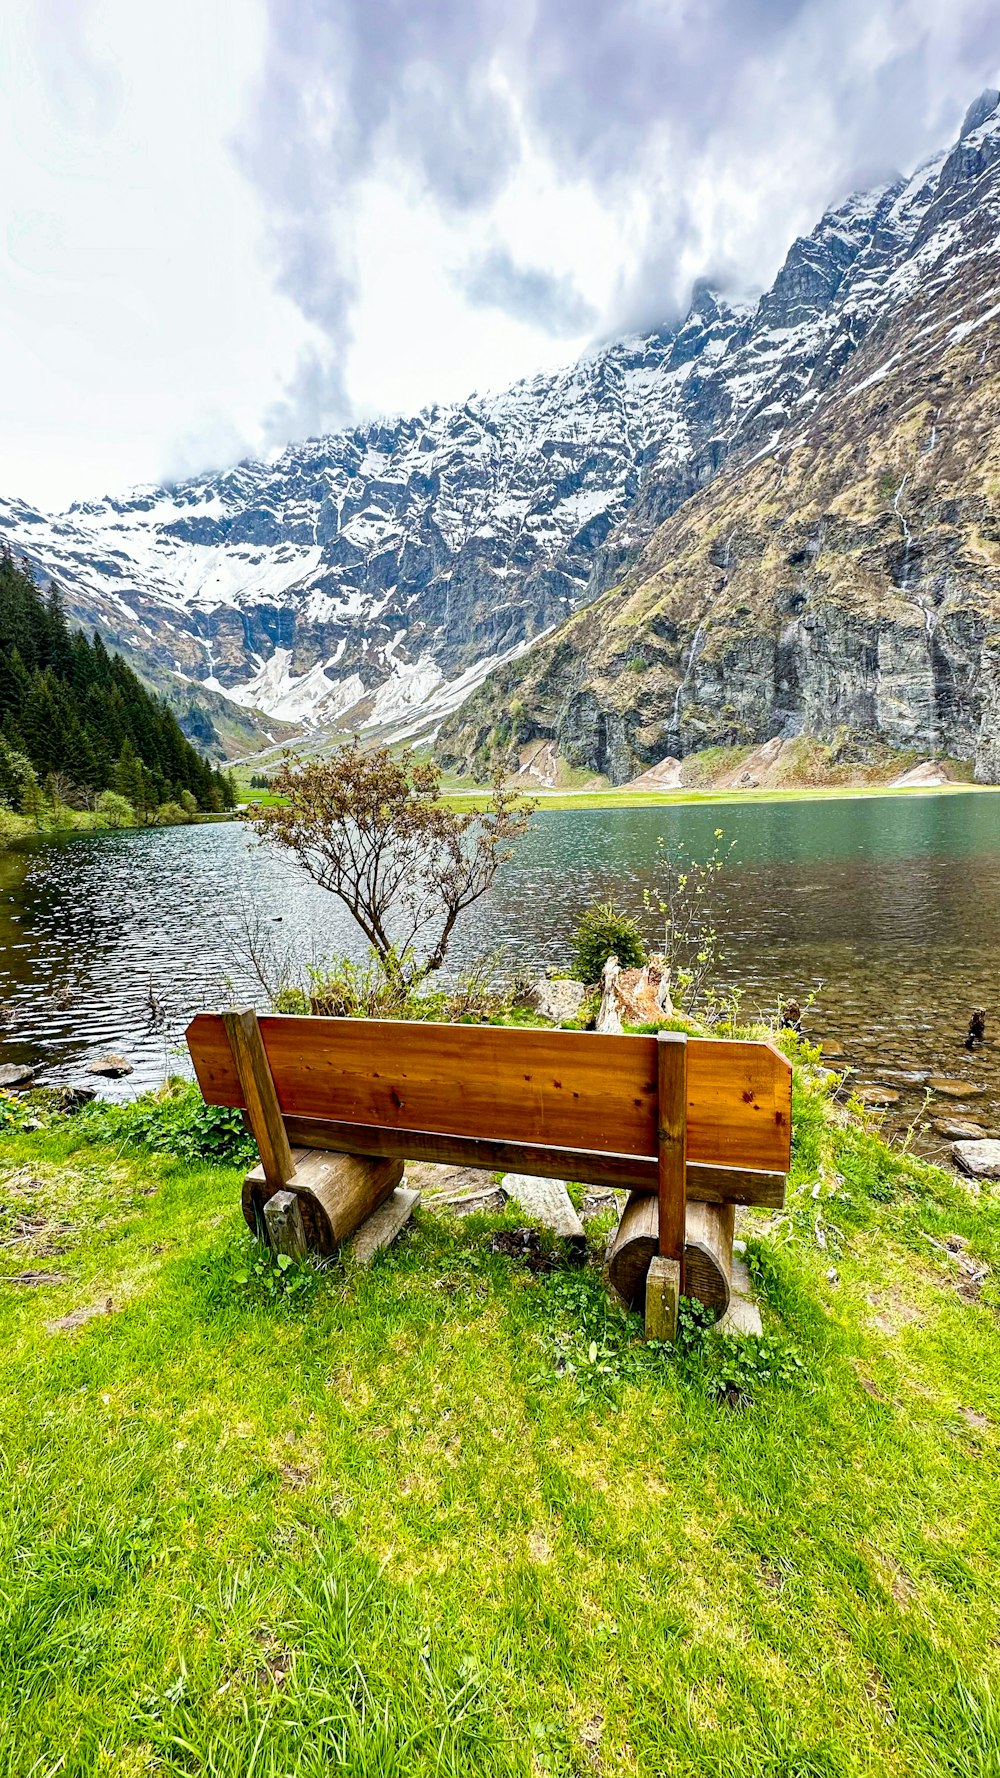 una panchina di legno seduta in cima a un campo verde lussureggiante